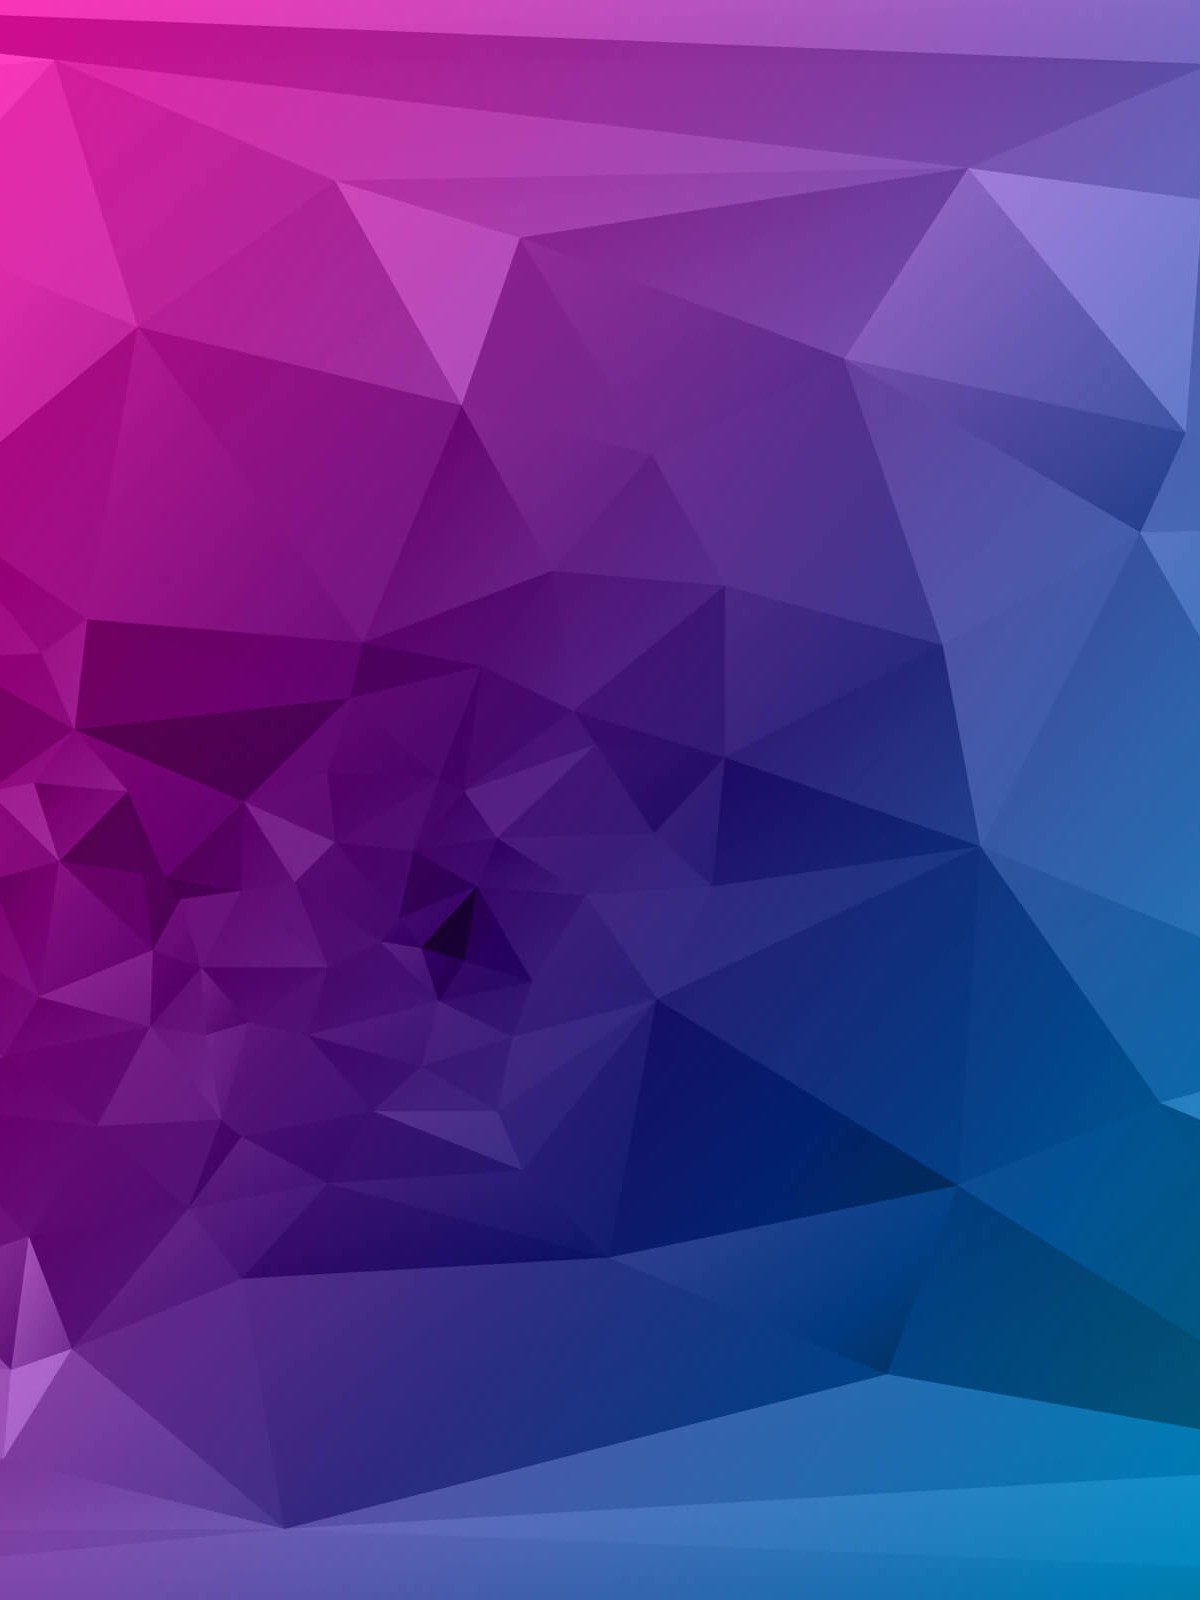 Purple Polygonal Background Wallpaper For Kindle Fire HDx Jpg